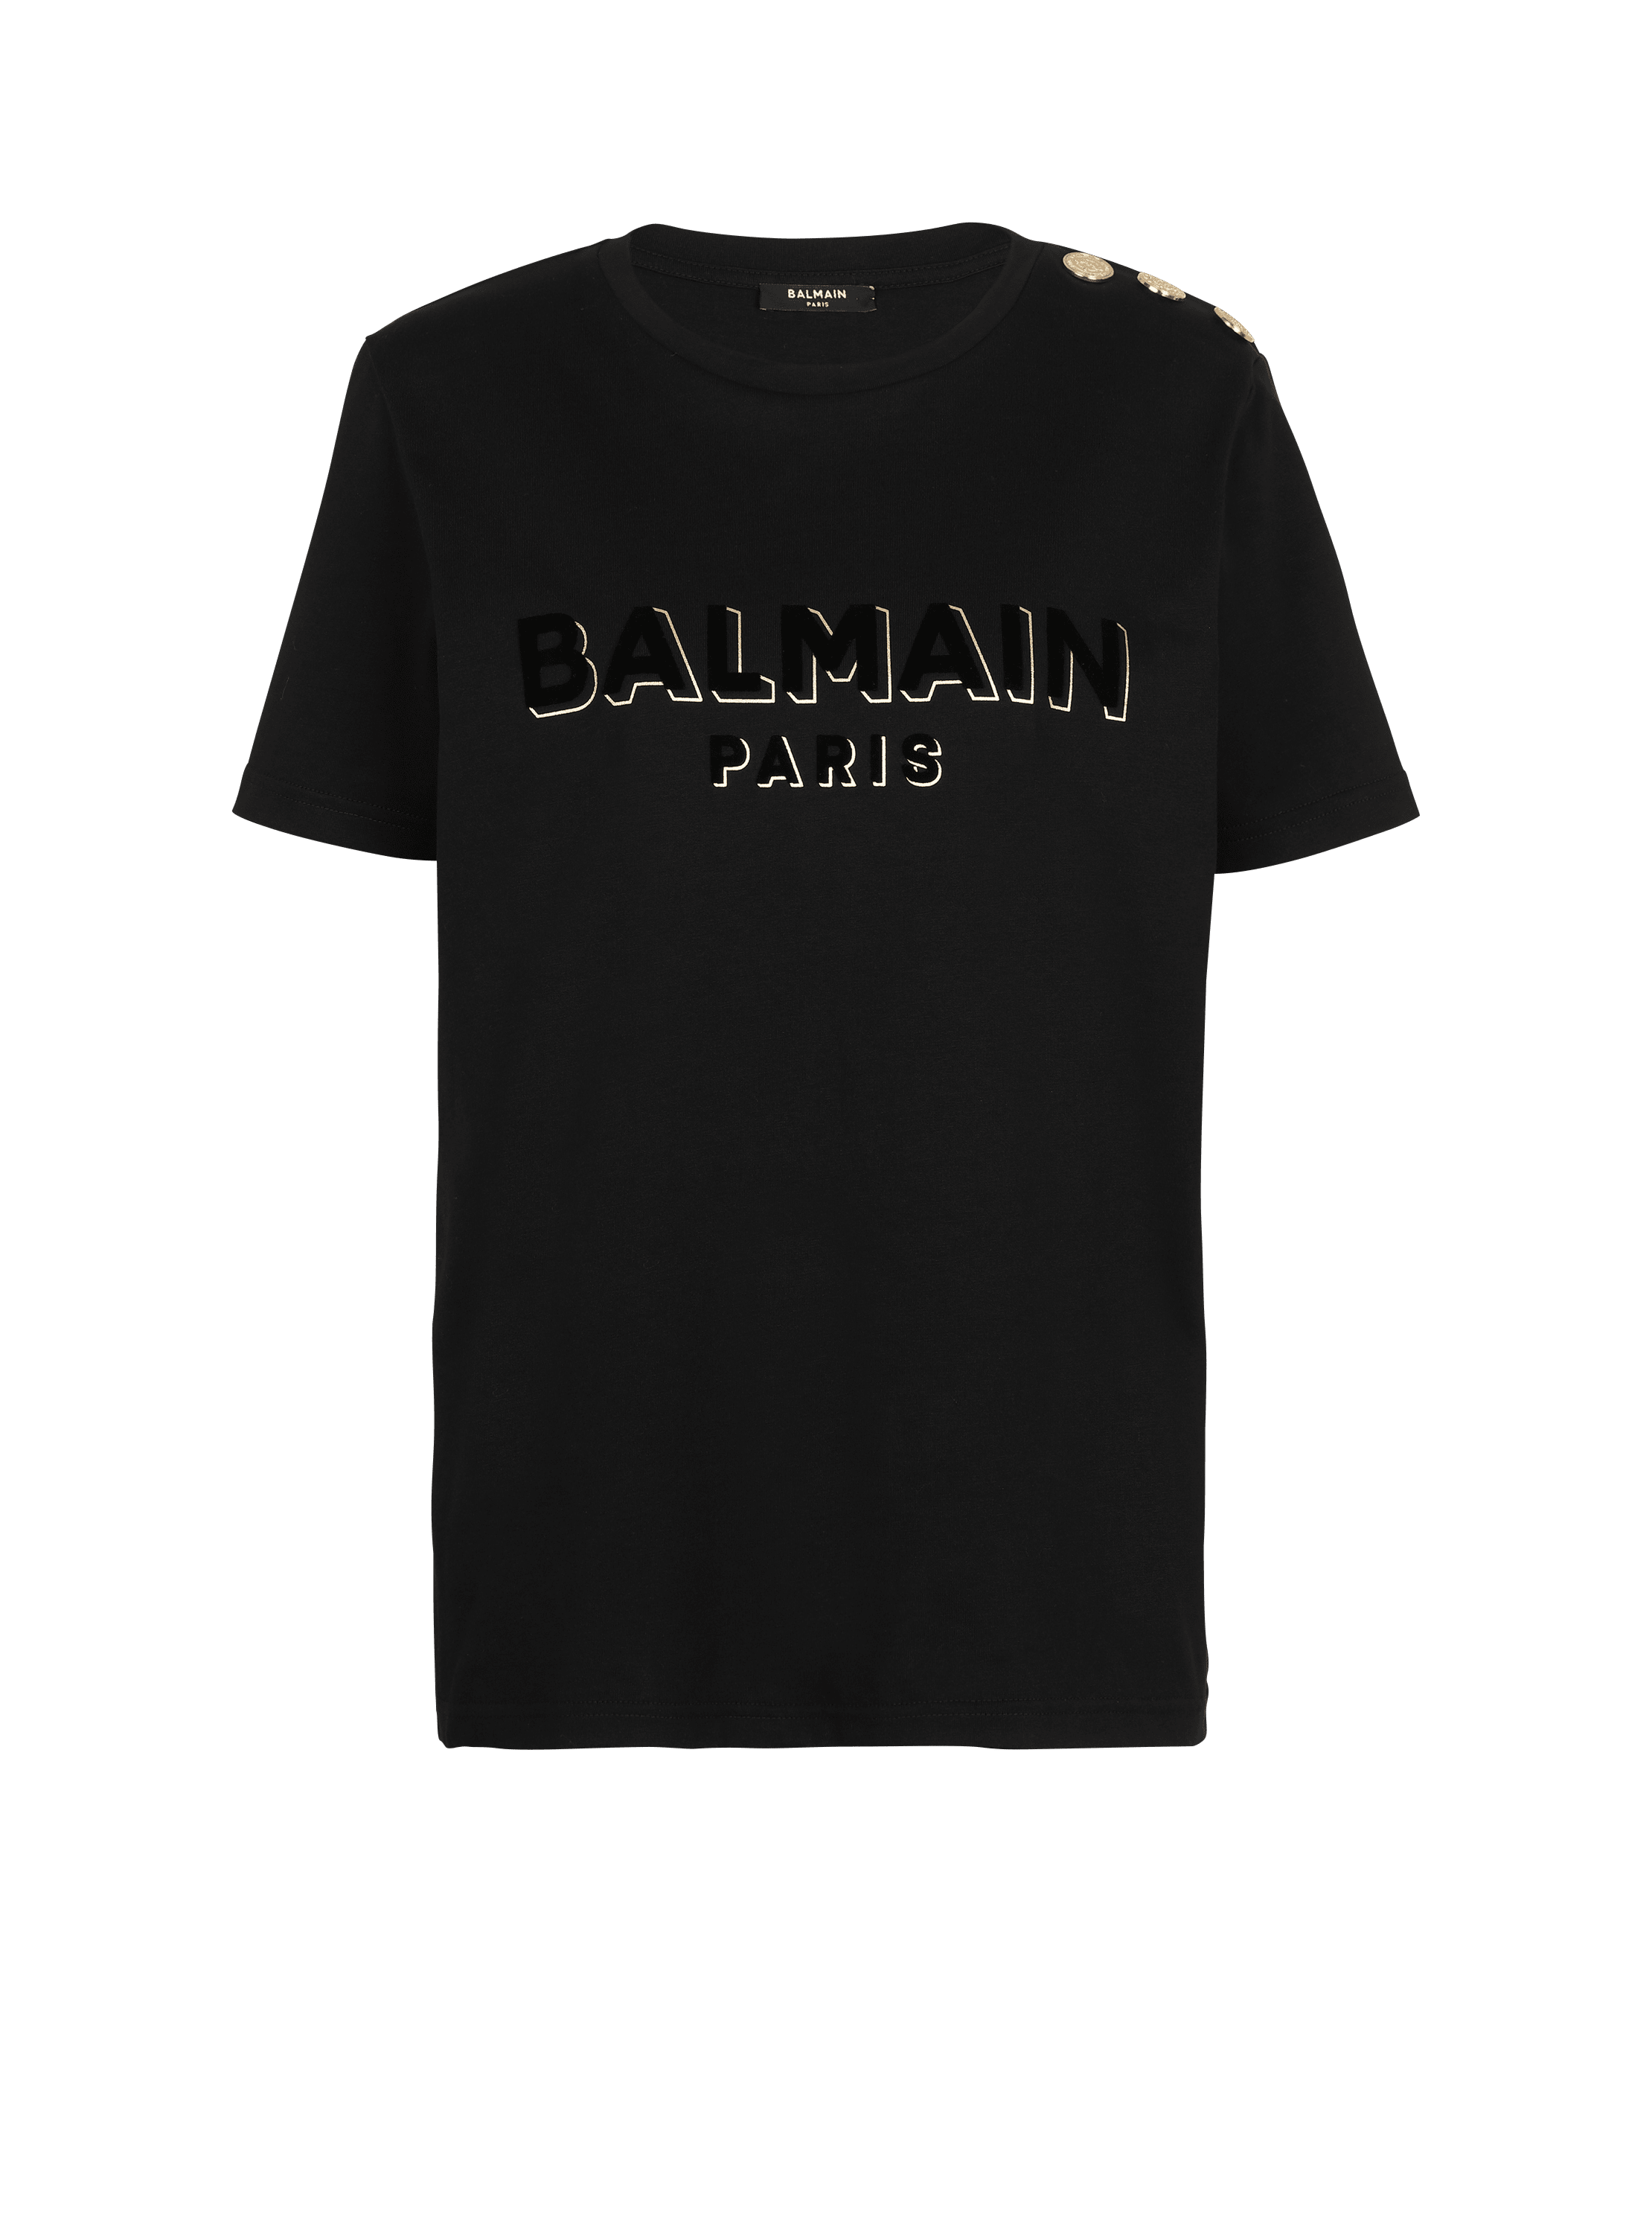 T-shirt en coton à logo Balmain métallique floqué, noir, hi-res